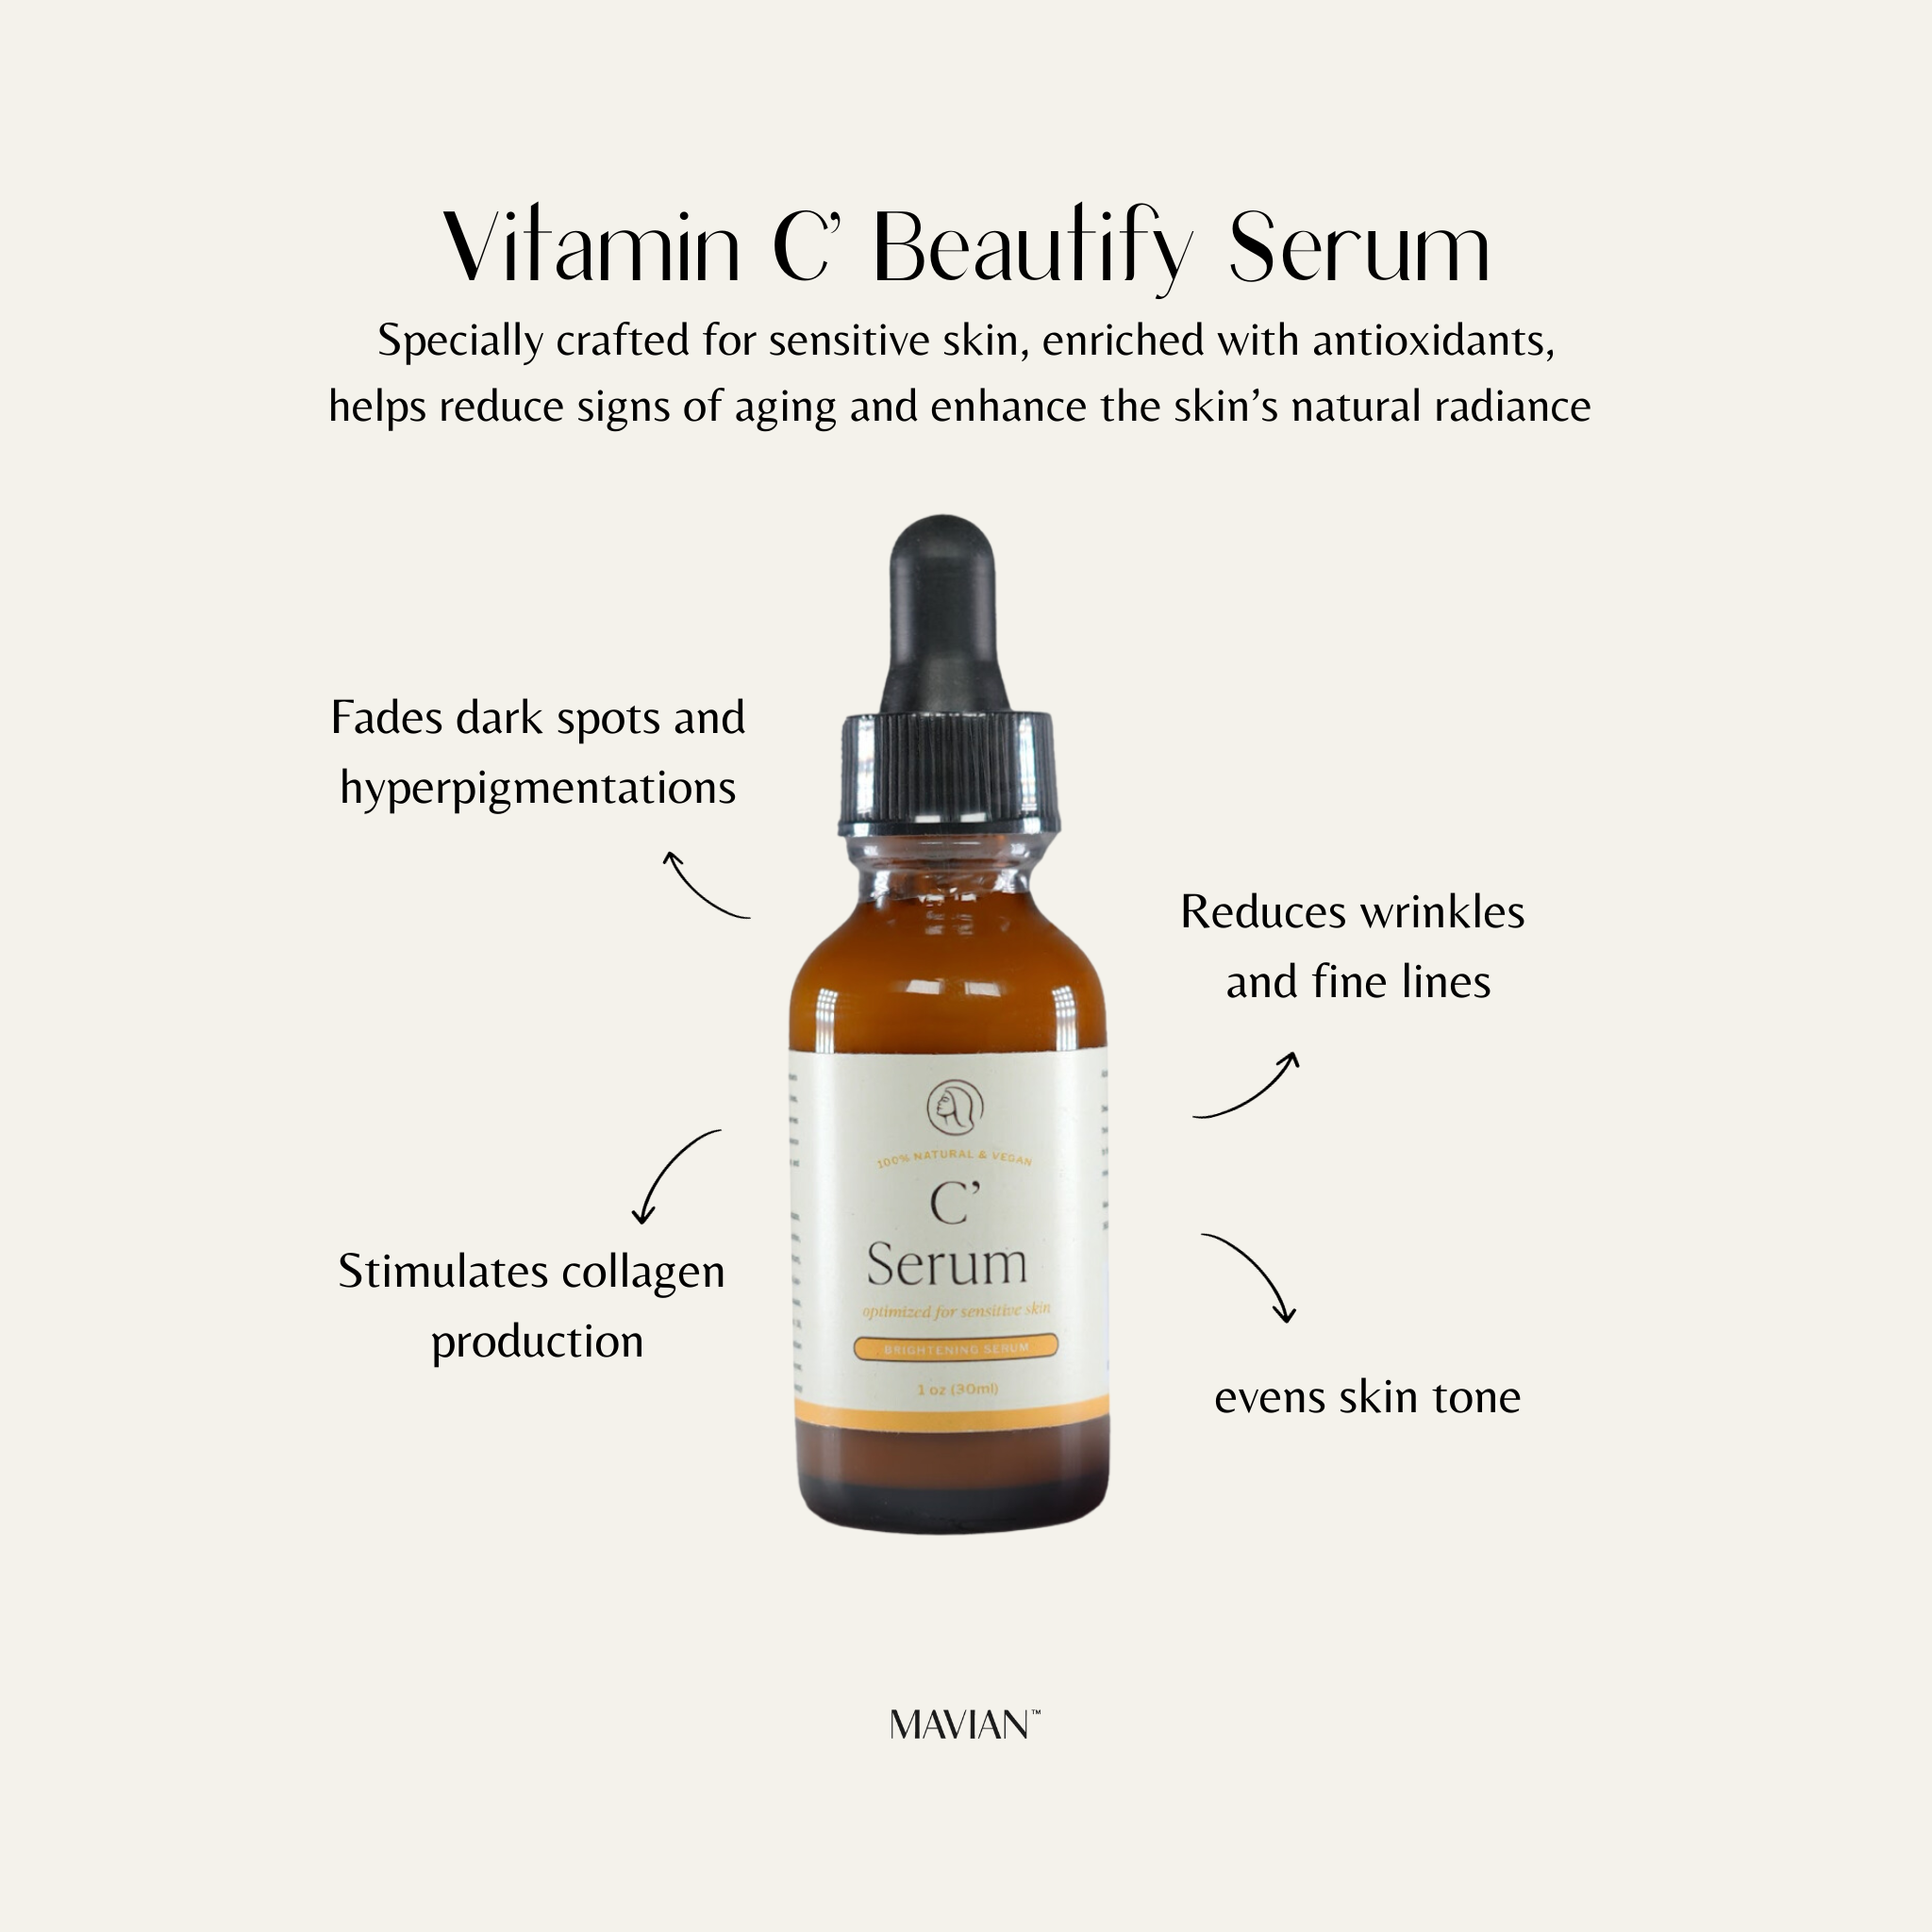 Vitamin C Serum Mavian Beauty benefits: fades dark spots, reduces wrinkles, stimulates collagen and evens skin tone.